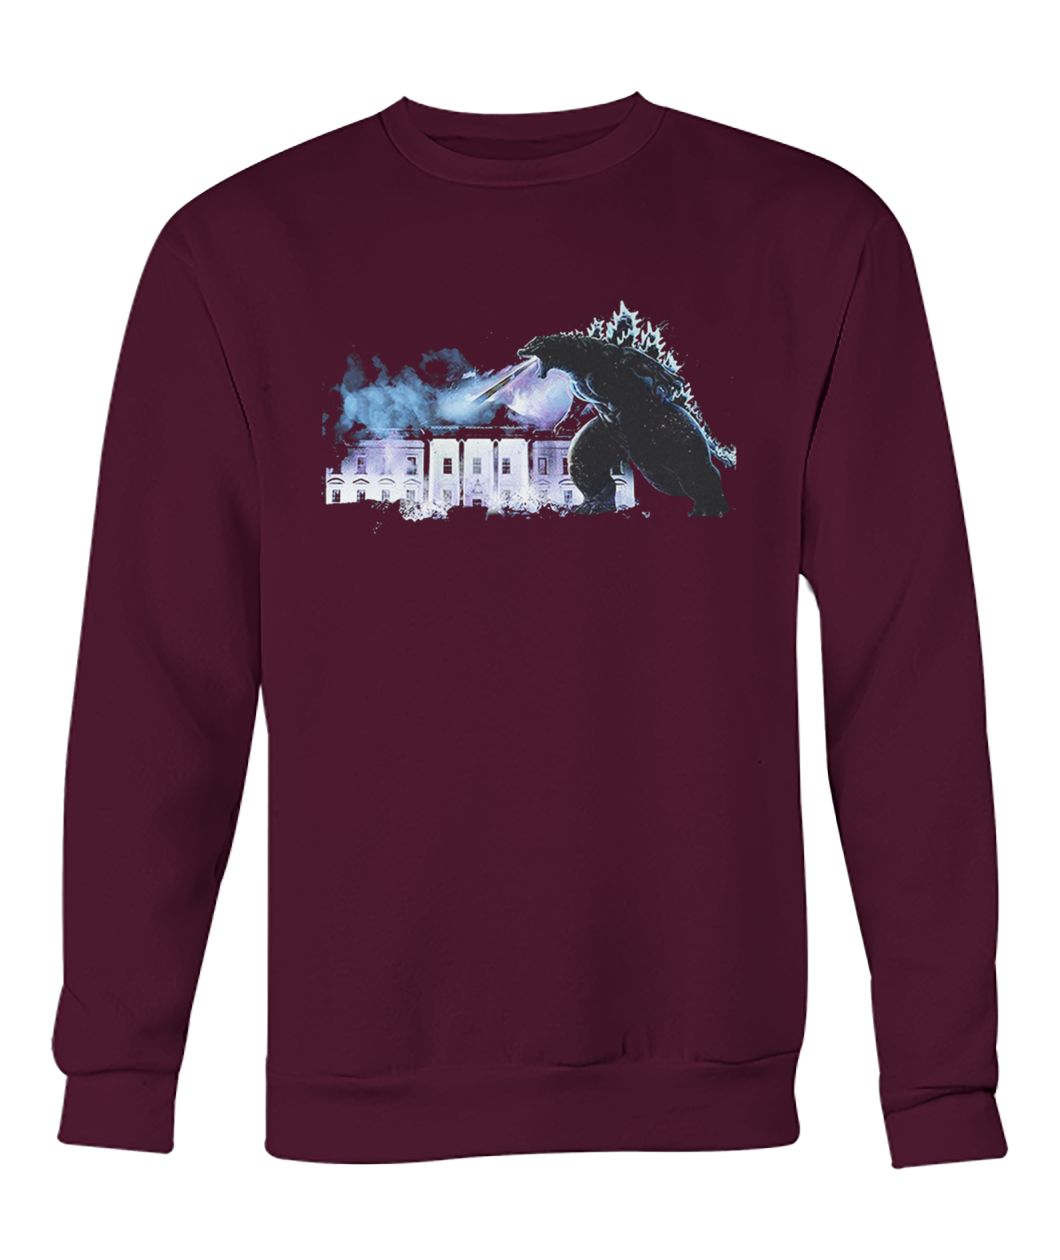 Godzilla atomic breath the white house king of the monsters crew neck sweatshirt